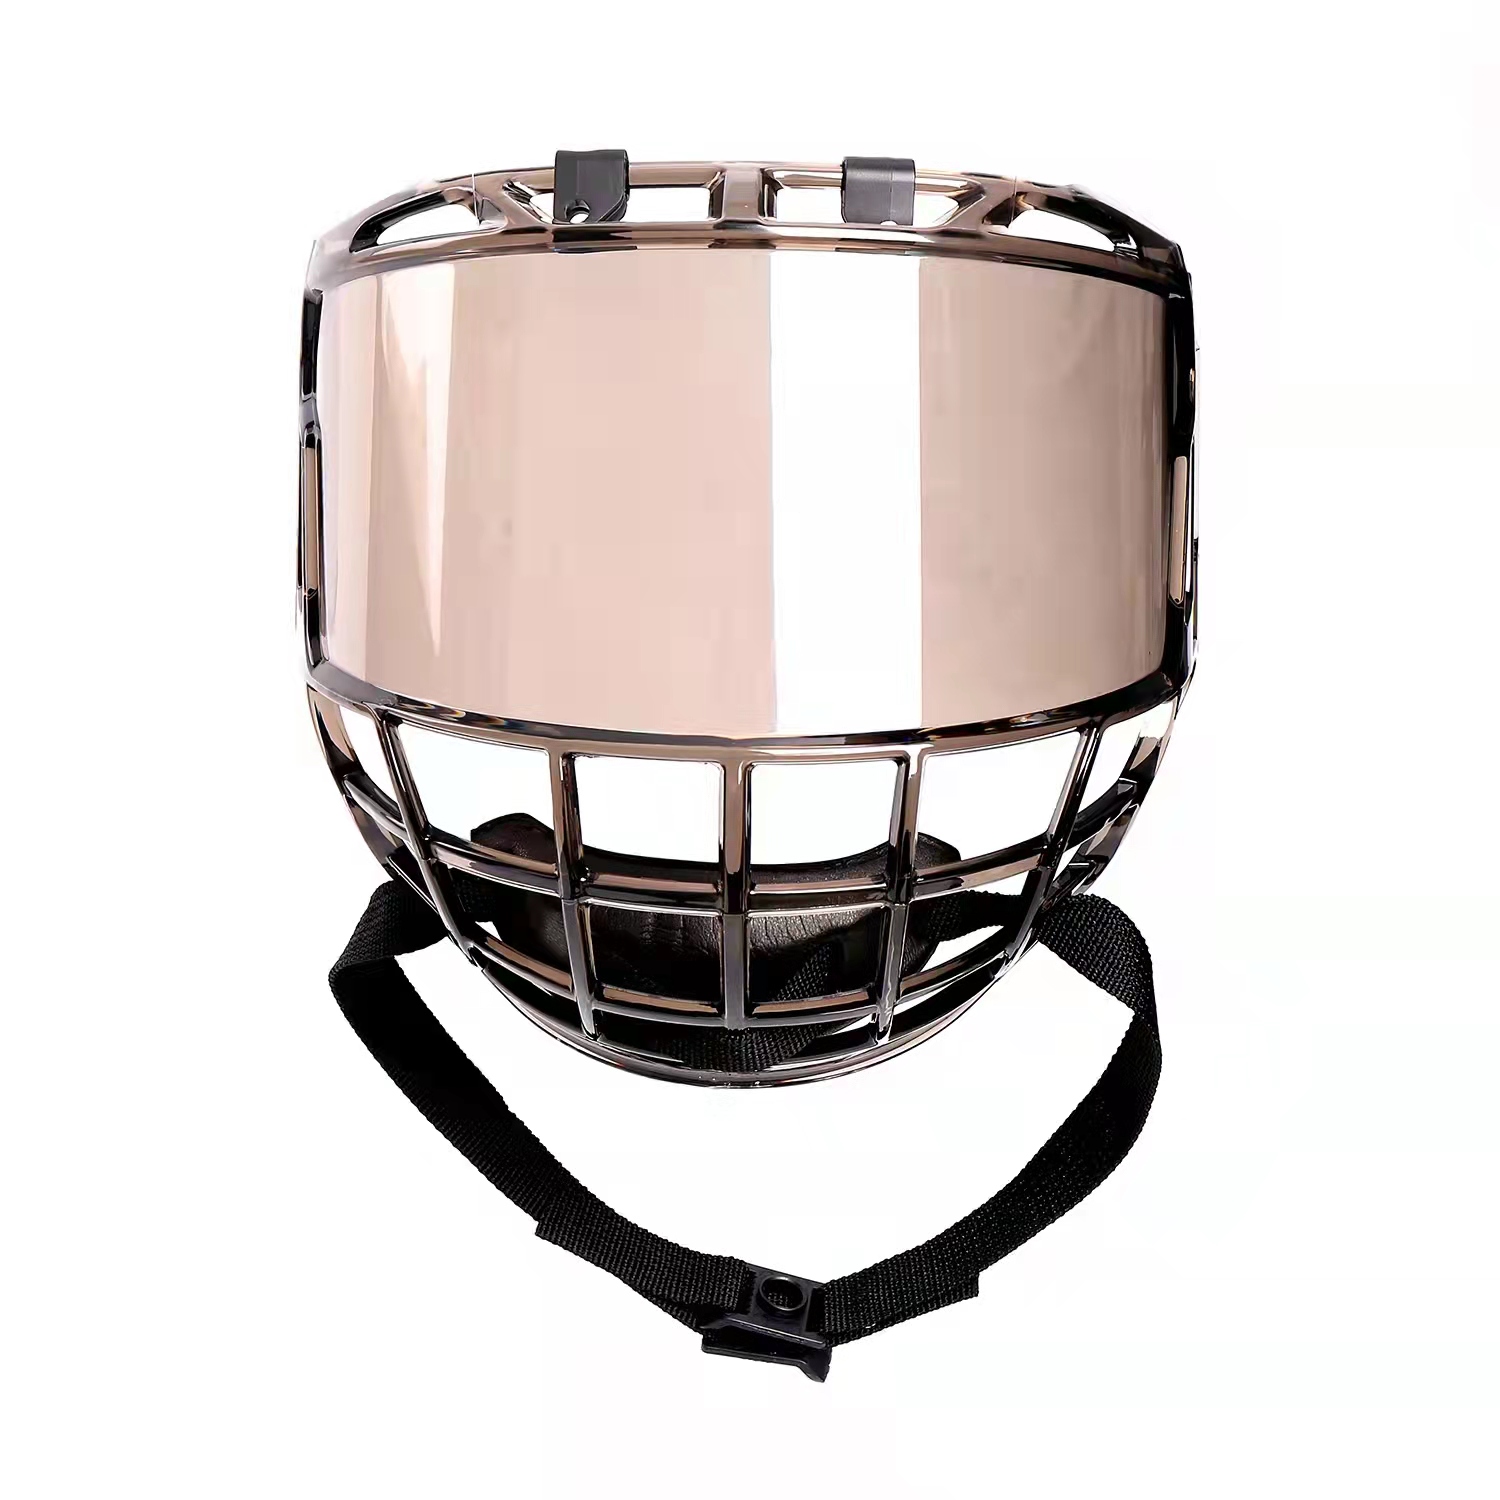 Superior Quality Safety Ice Hockey Helmet cage